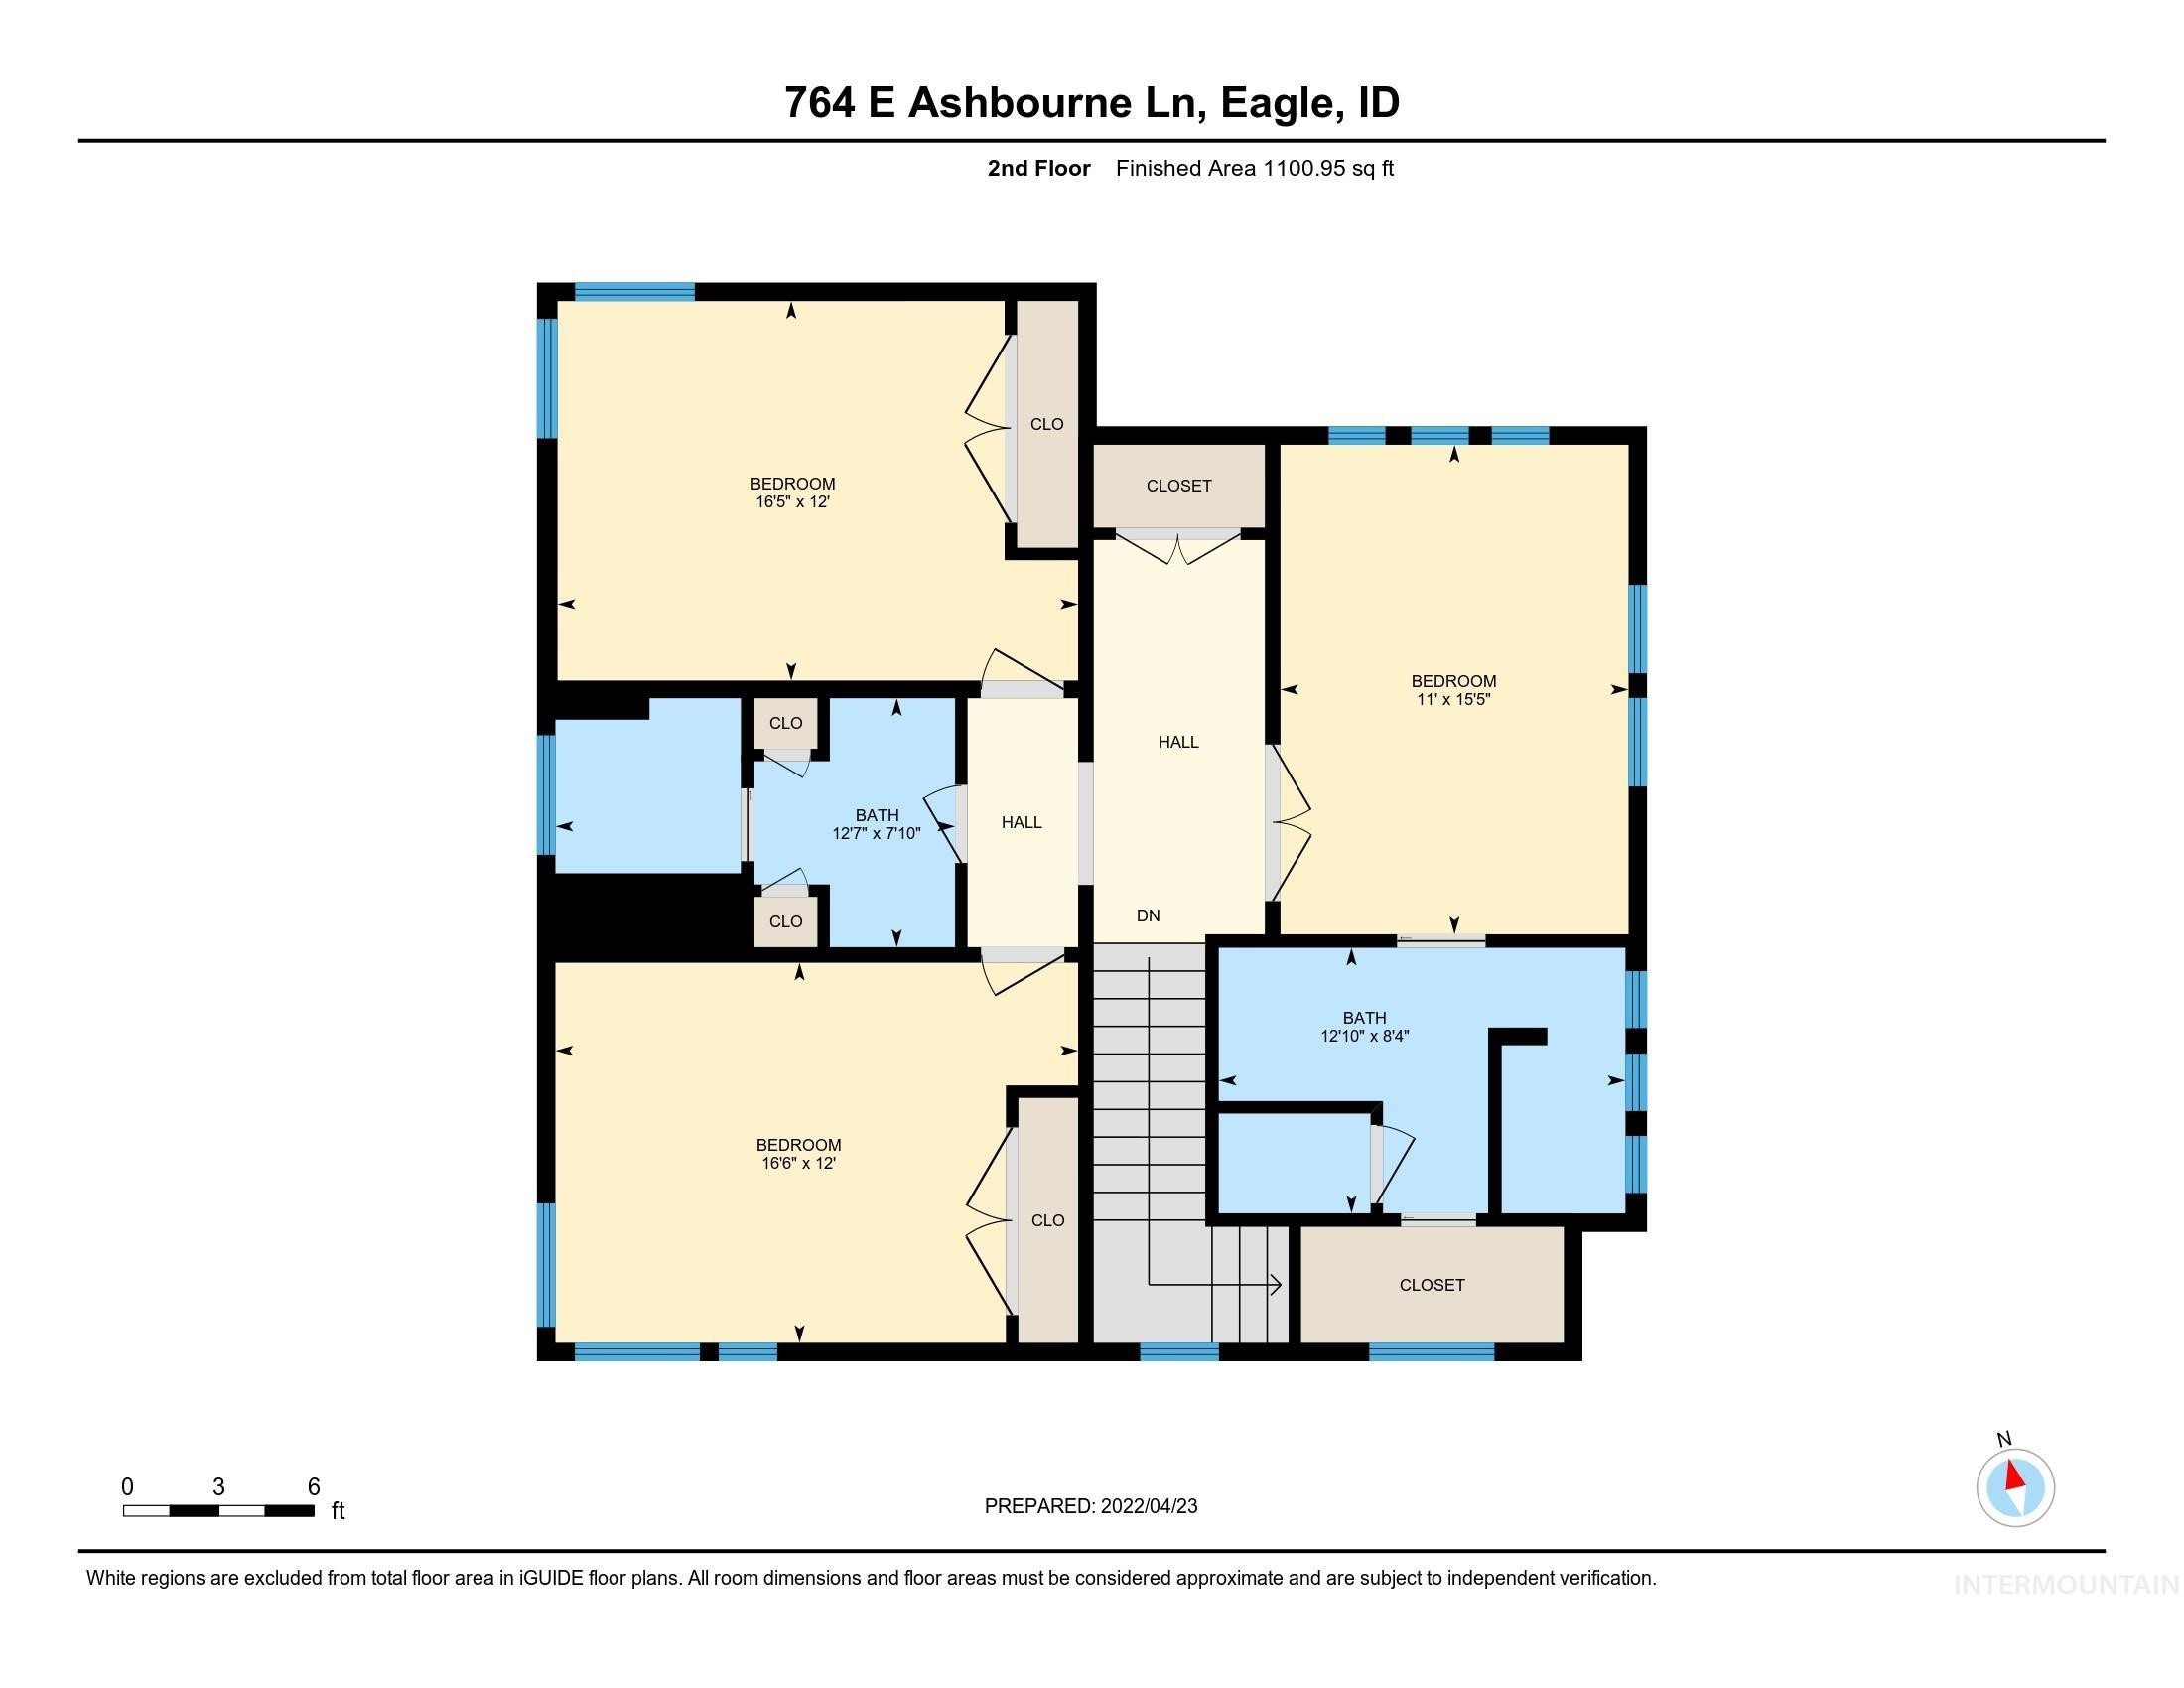 764 Ashbourne Lane, Eagle, Idaho, 83616, United States, 4 Bedrooms Bedrooms, ,4 BathroomsBathrooms,Residential,For Sale,764 ashbourne LN,1103207